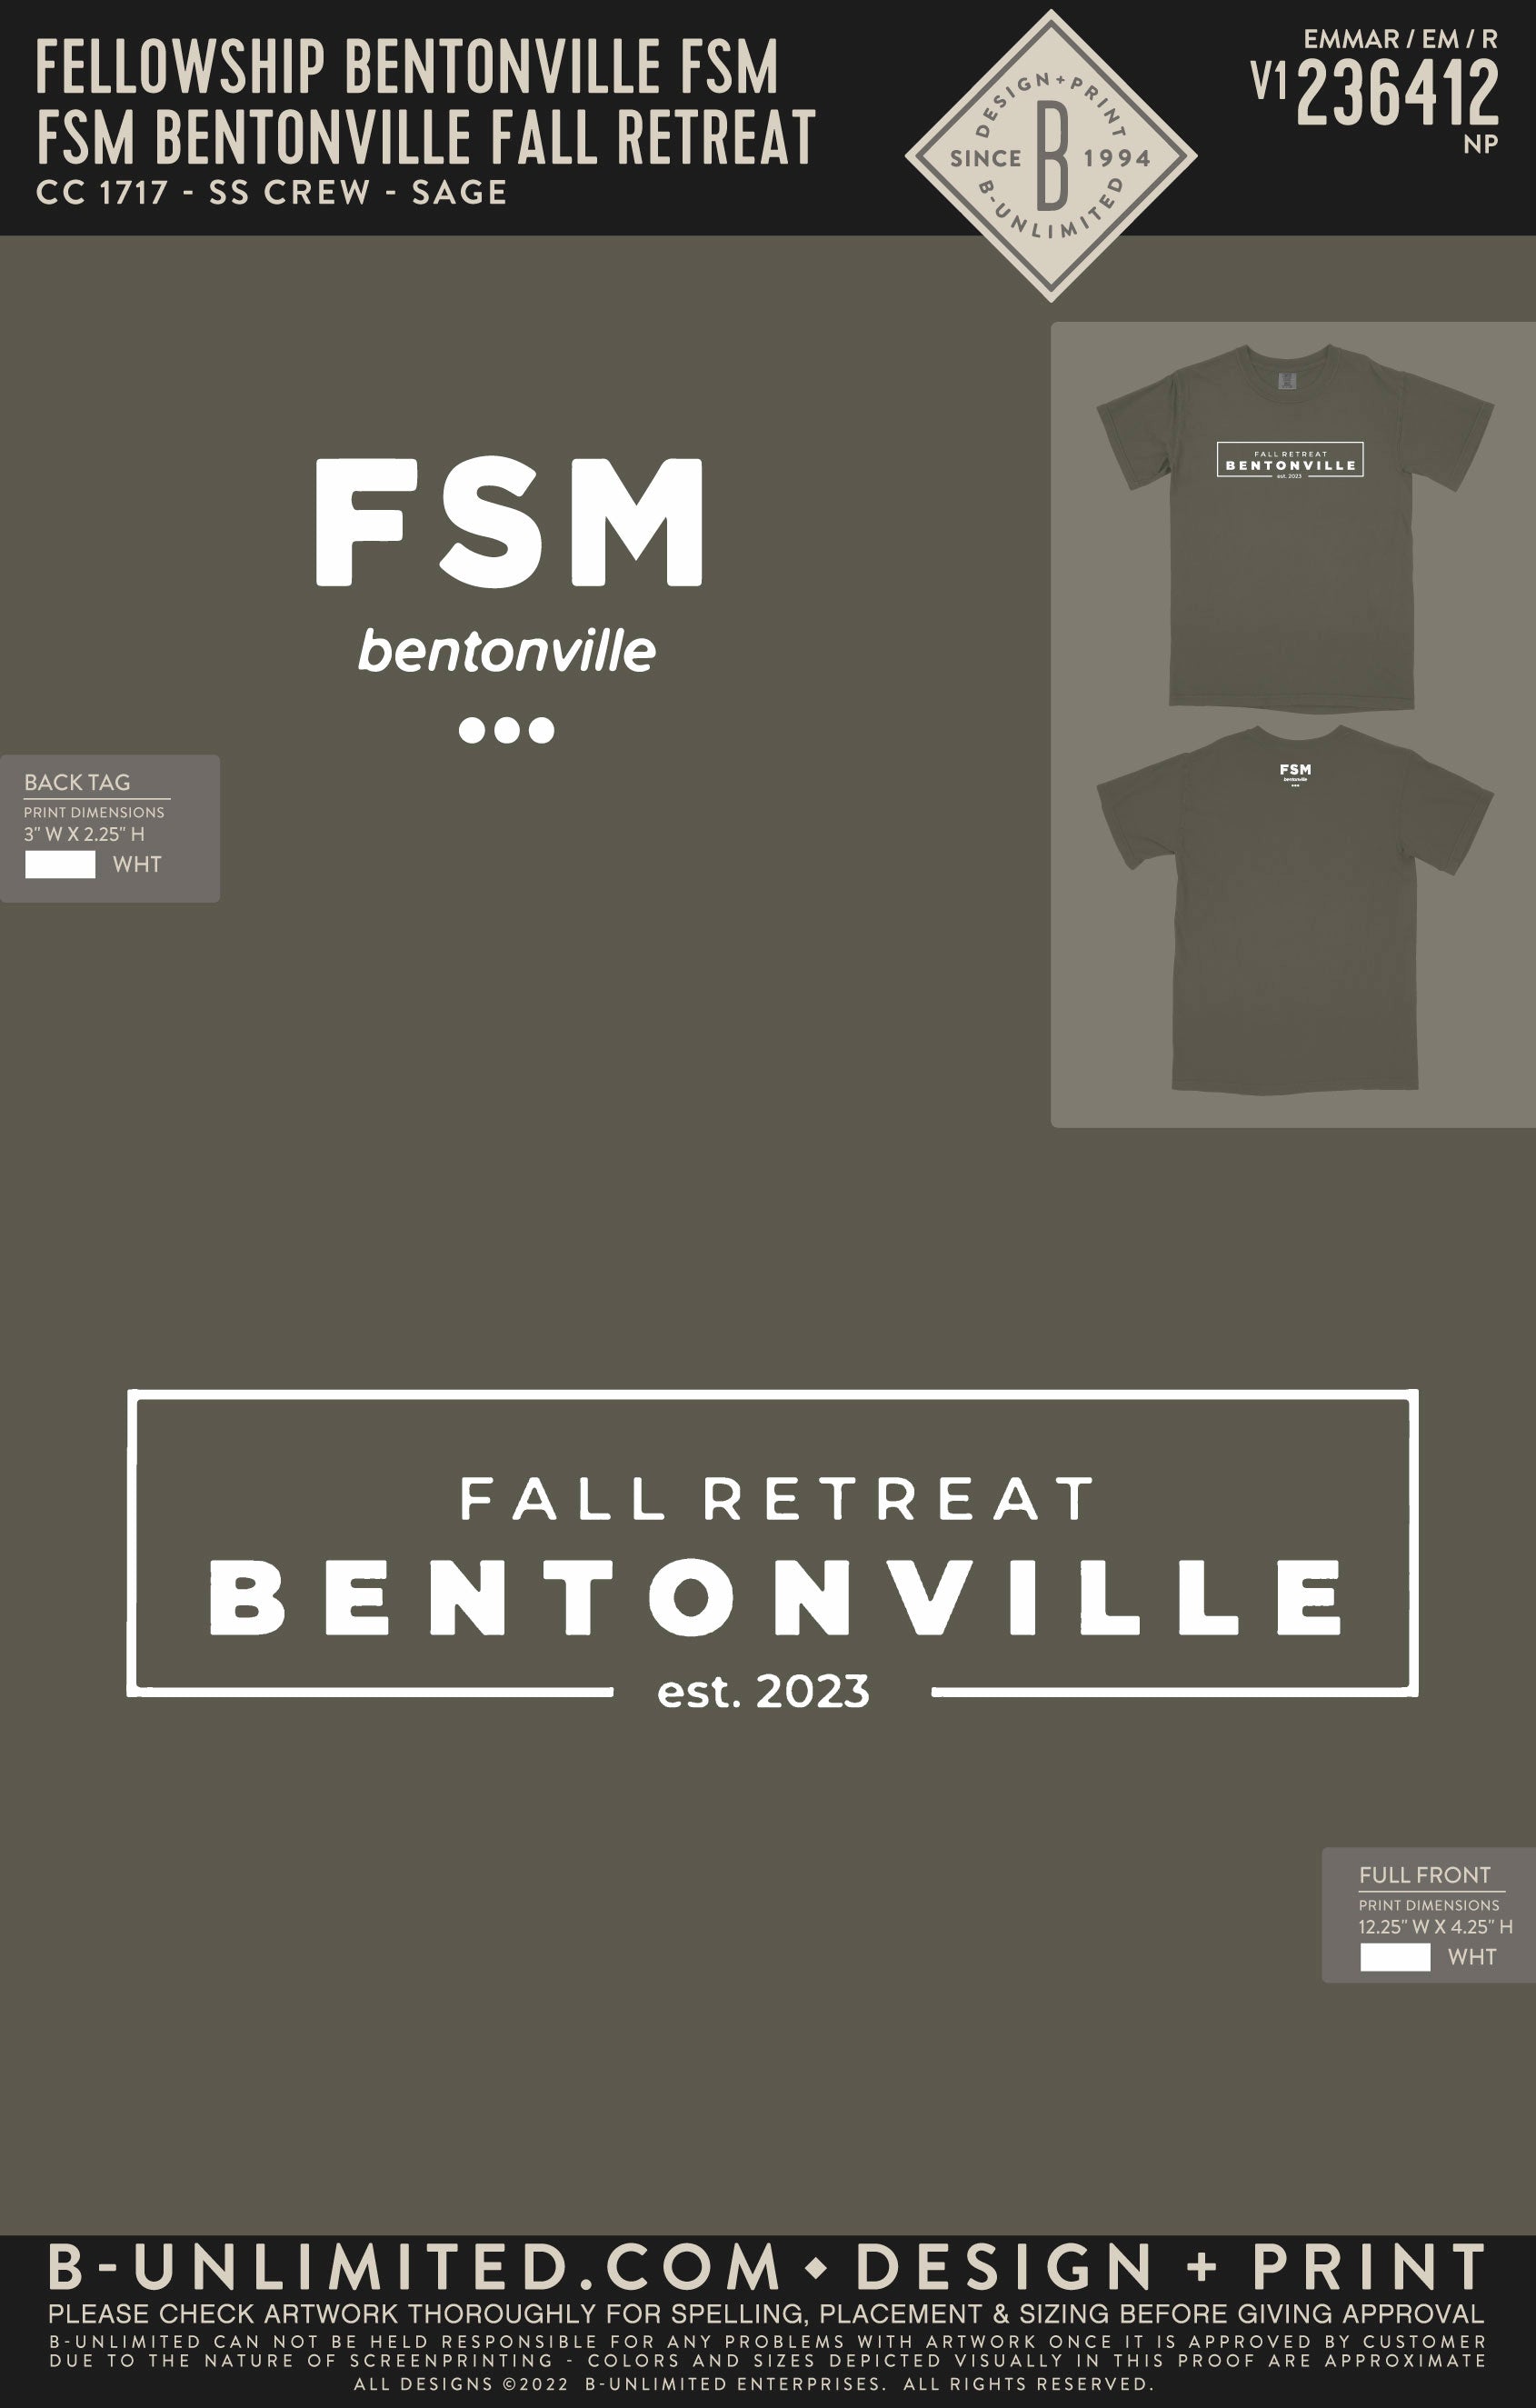 Fellowship Bentonville FSM - FSM Bentonville Fall Retreat - CC - 1717 - SS Crew - Sage